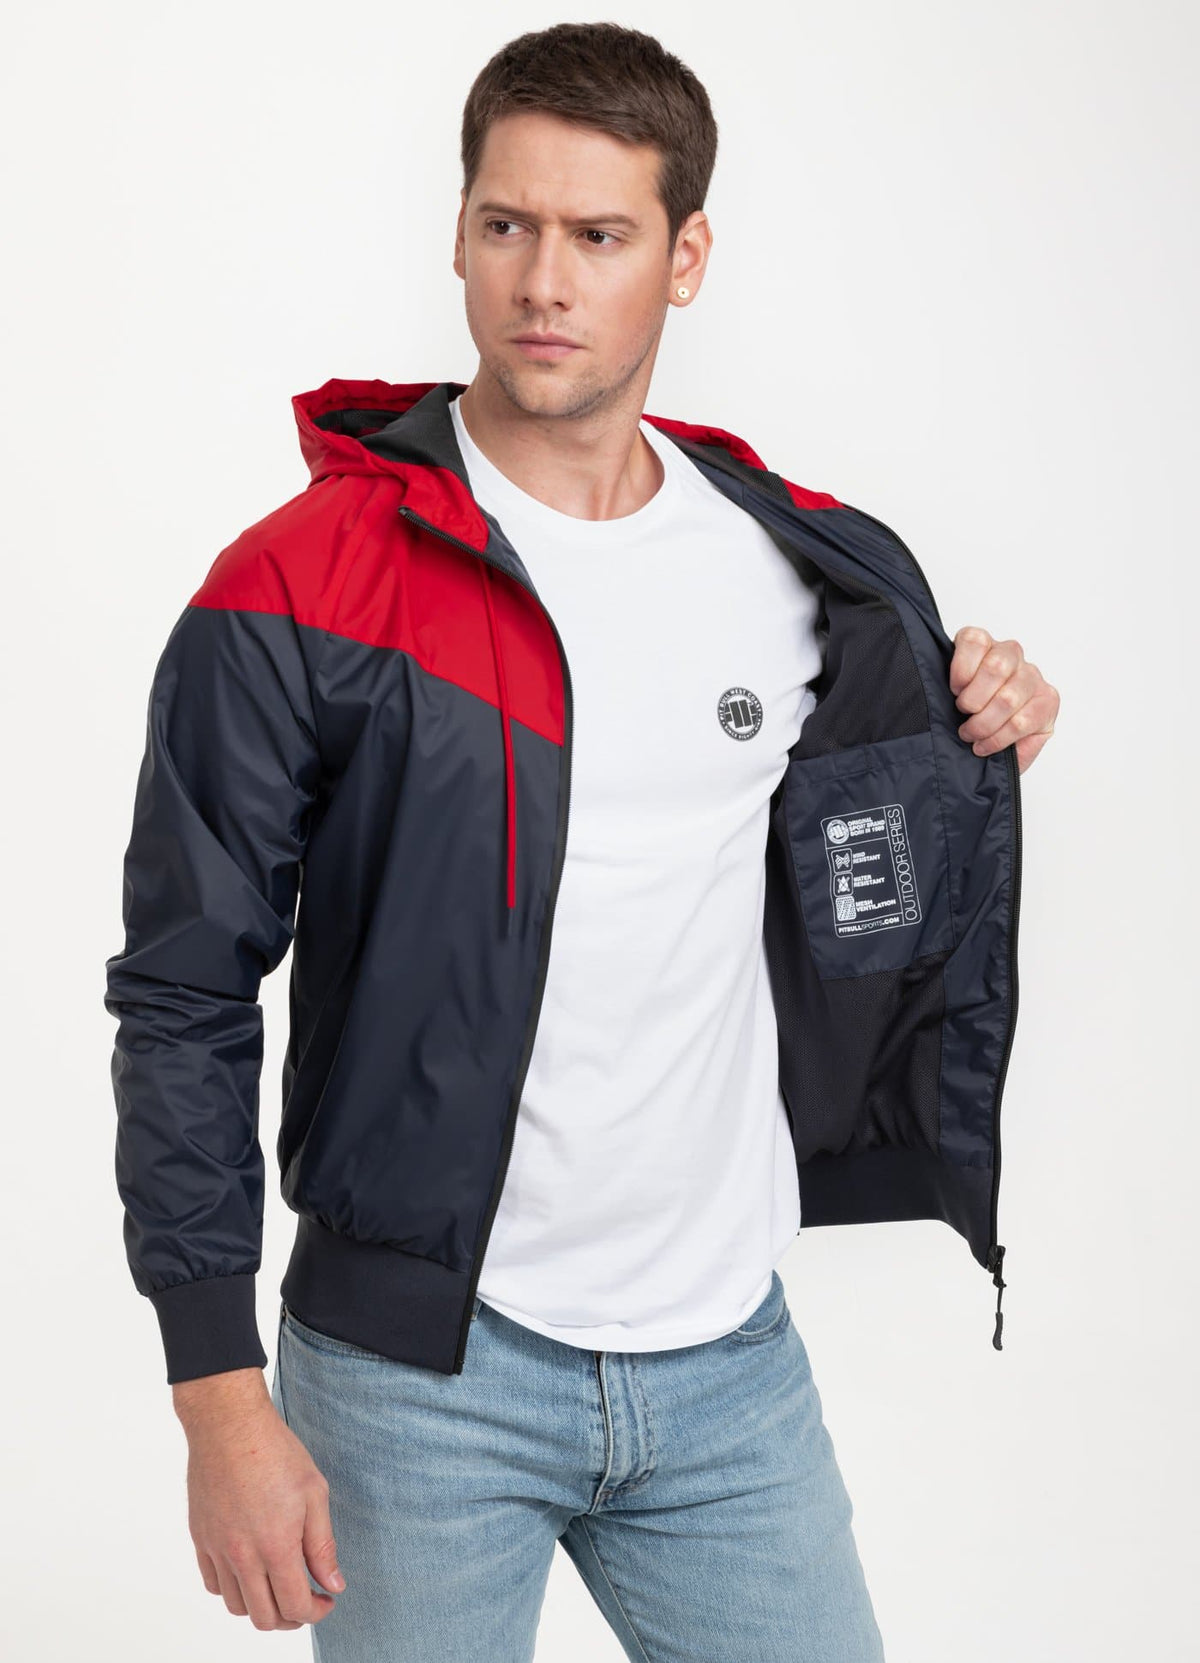 Jacket DIVISION Dark Navy/Red - Pitbull West Coast International Store 